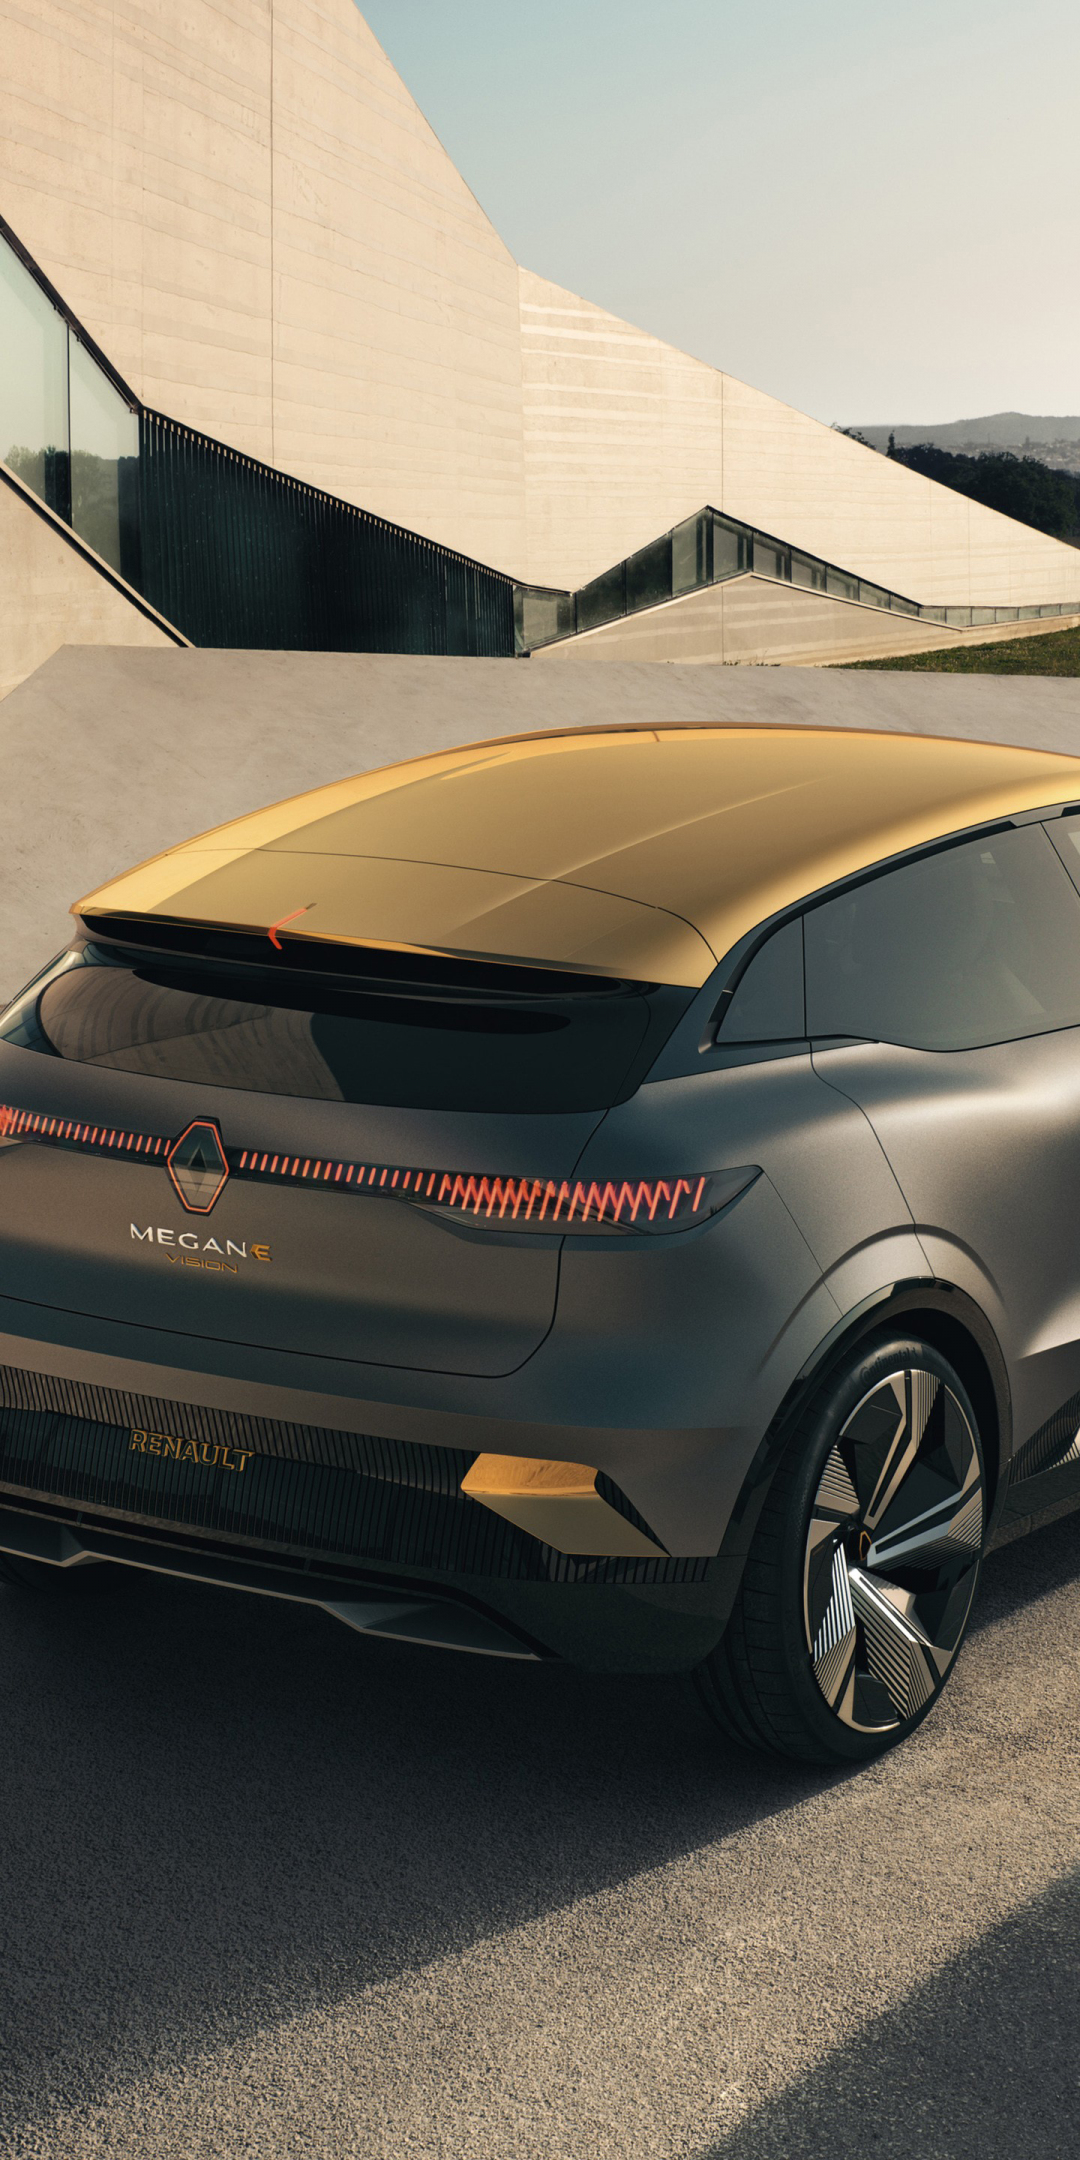 Renault Megane eVision, 2020 car, rear-view, 1080x2160 wallpaper